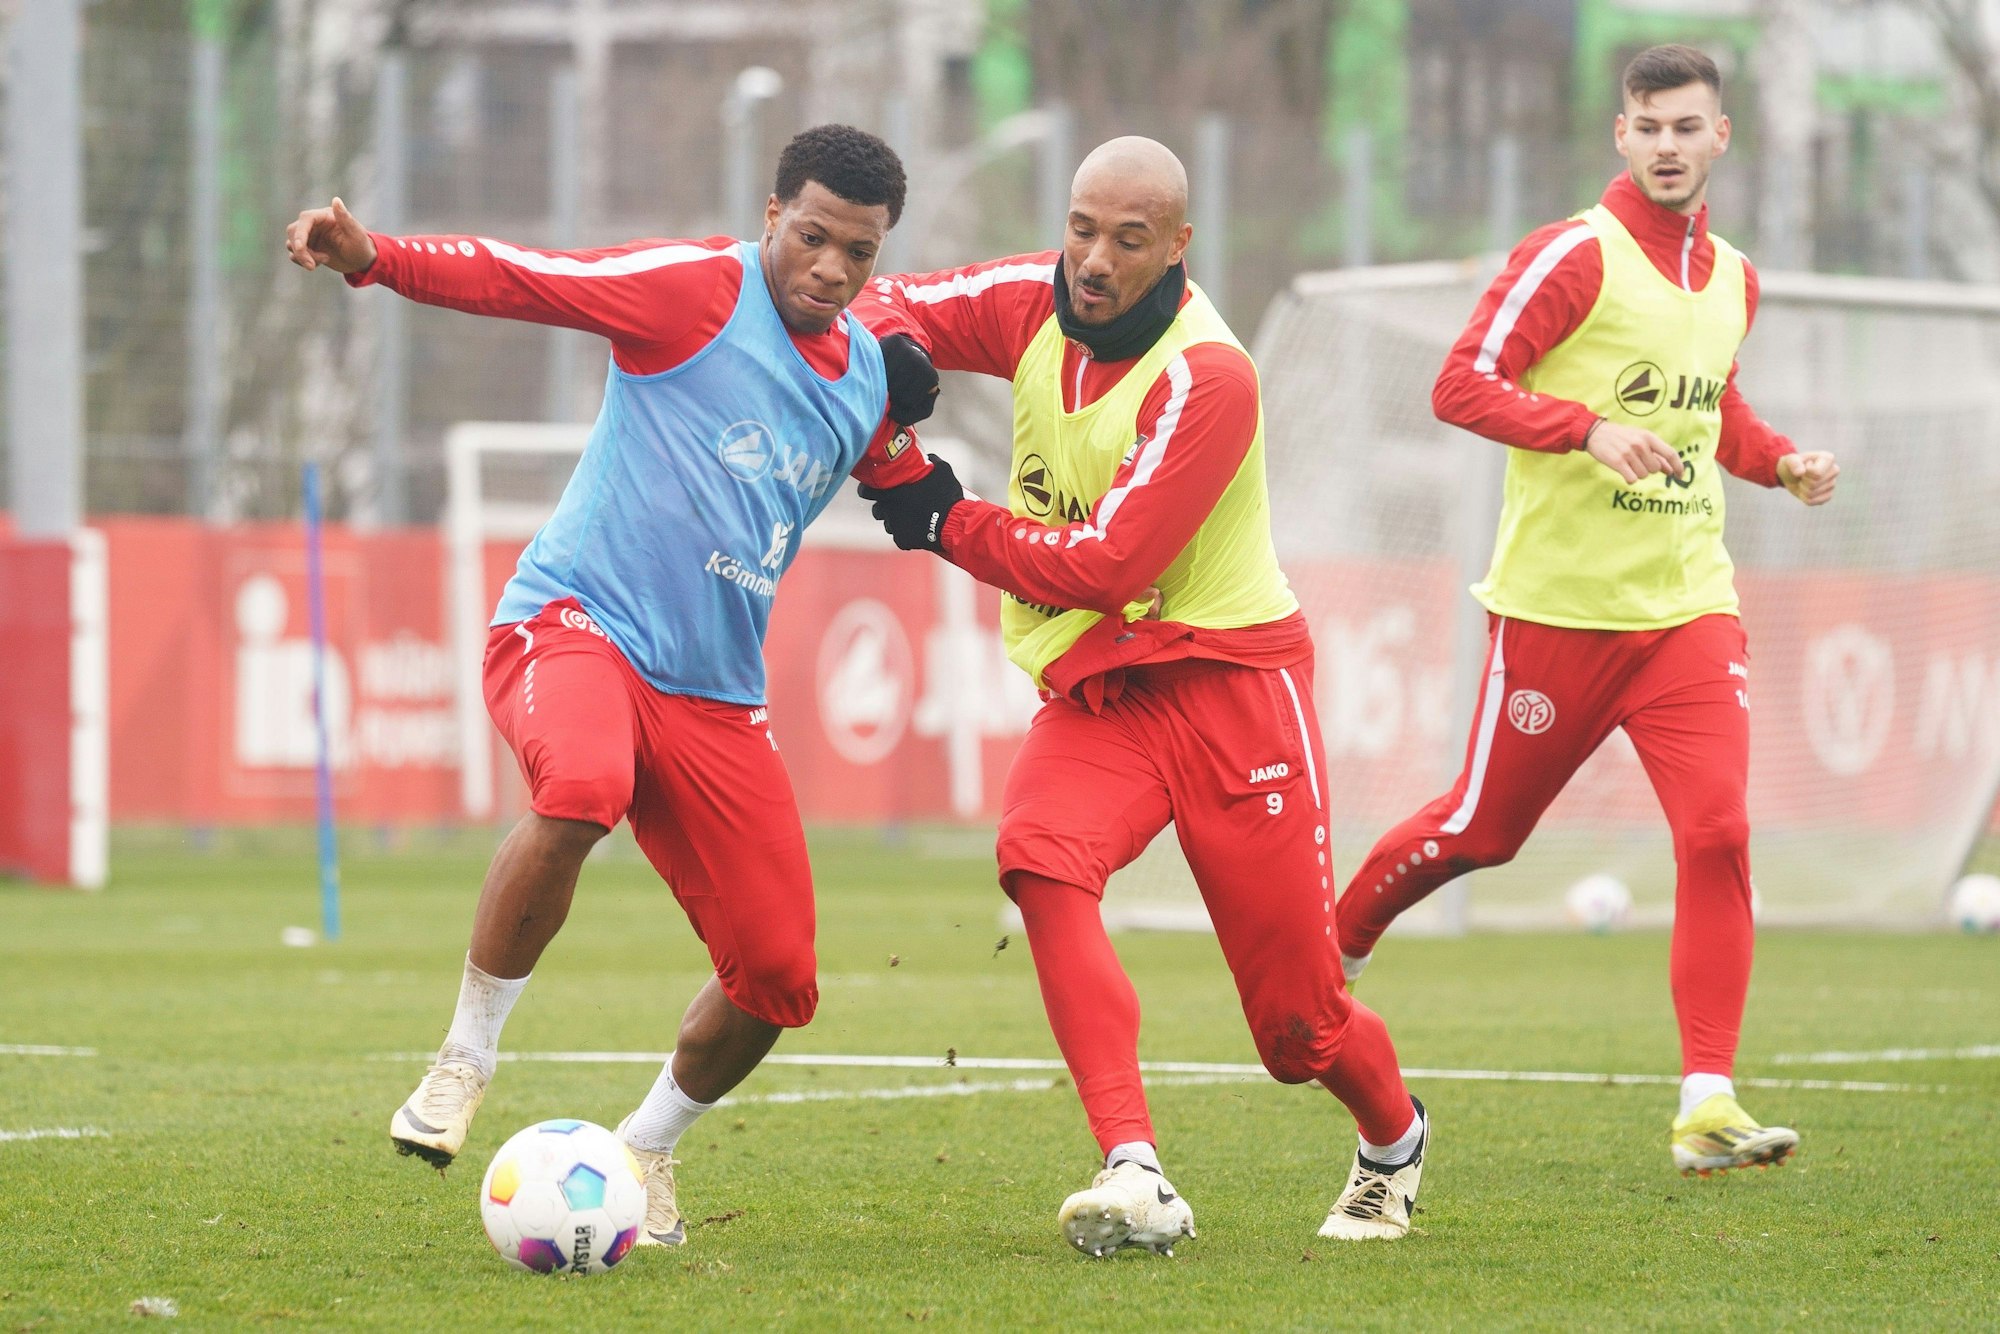 Jessic Ngankam behauptet den Ball im Mainz-Training gegen Karim Onisiwo. Tom Krauß schaut zu.